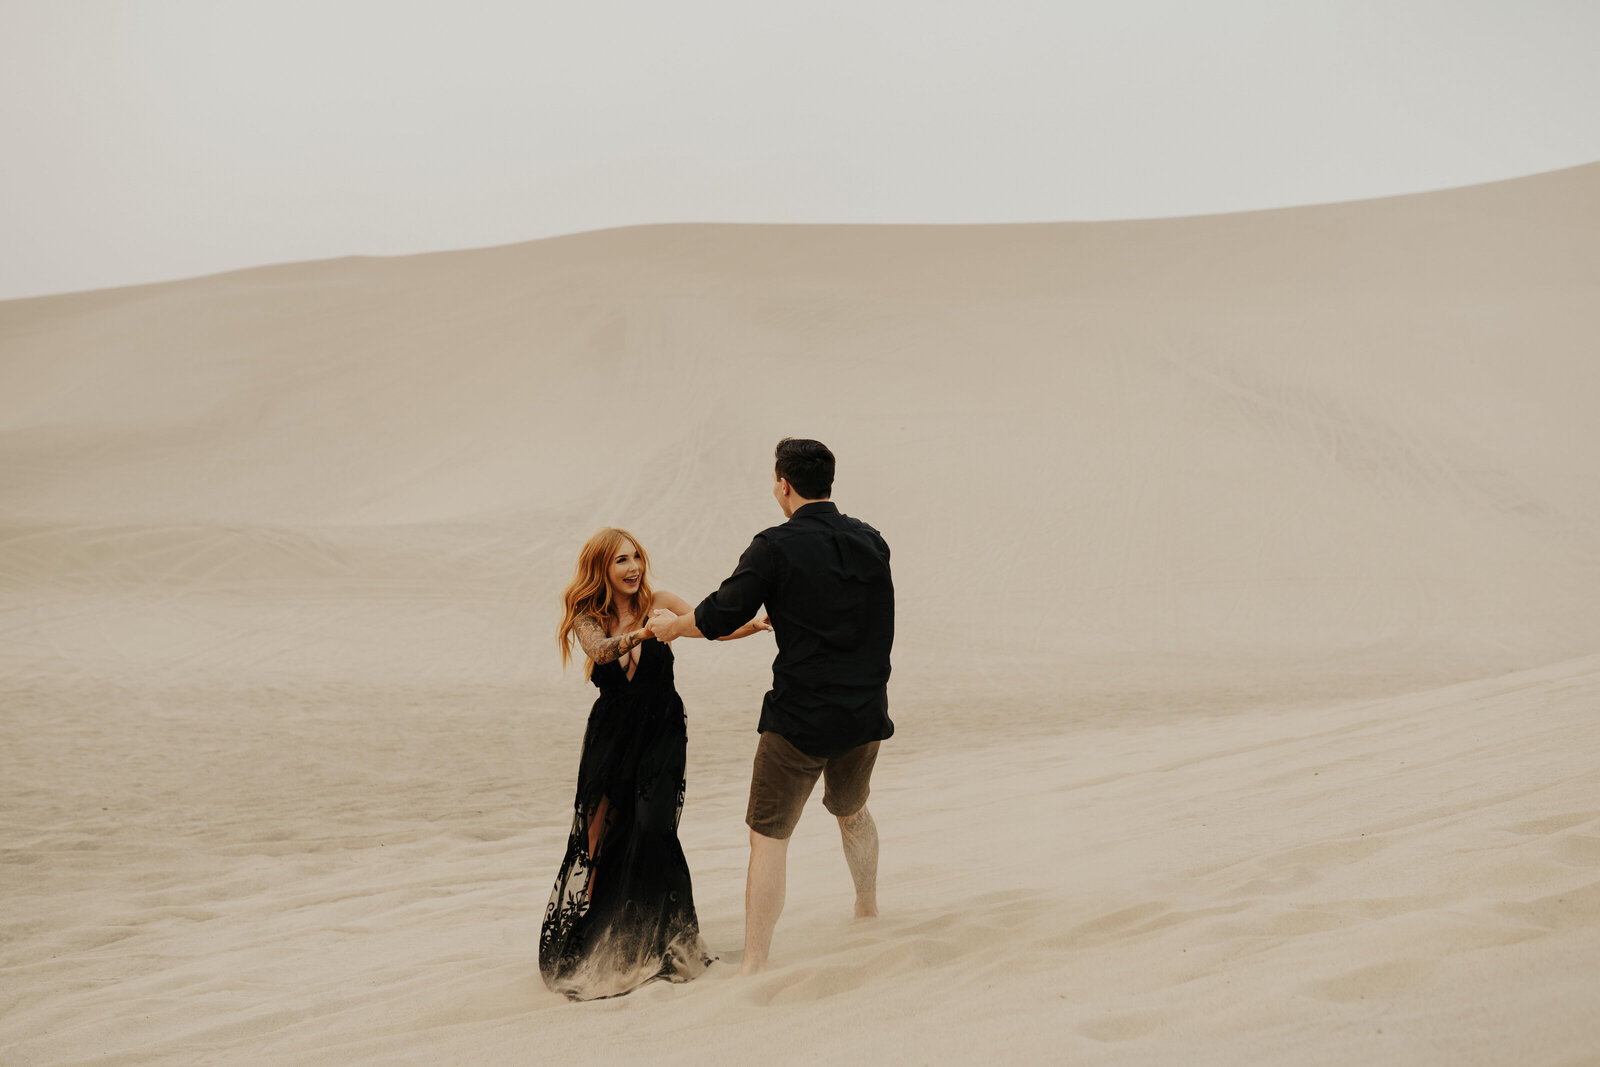 Sand Dunes Couples Photos - Raquel King Photography32